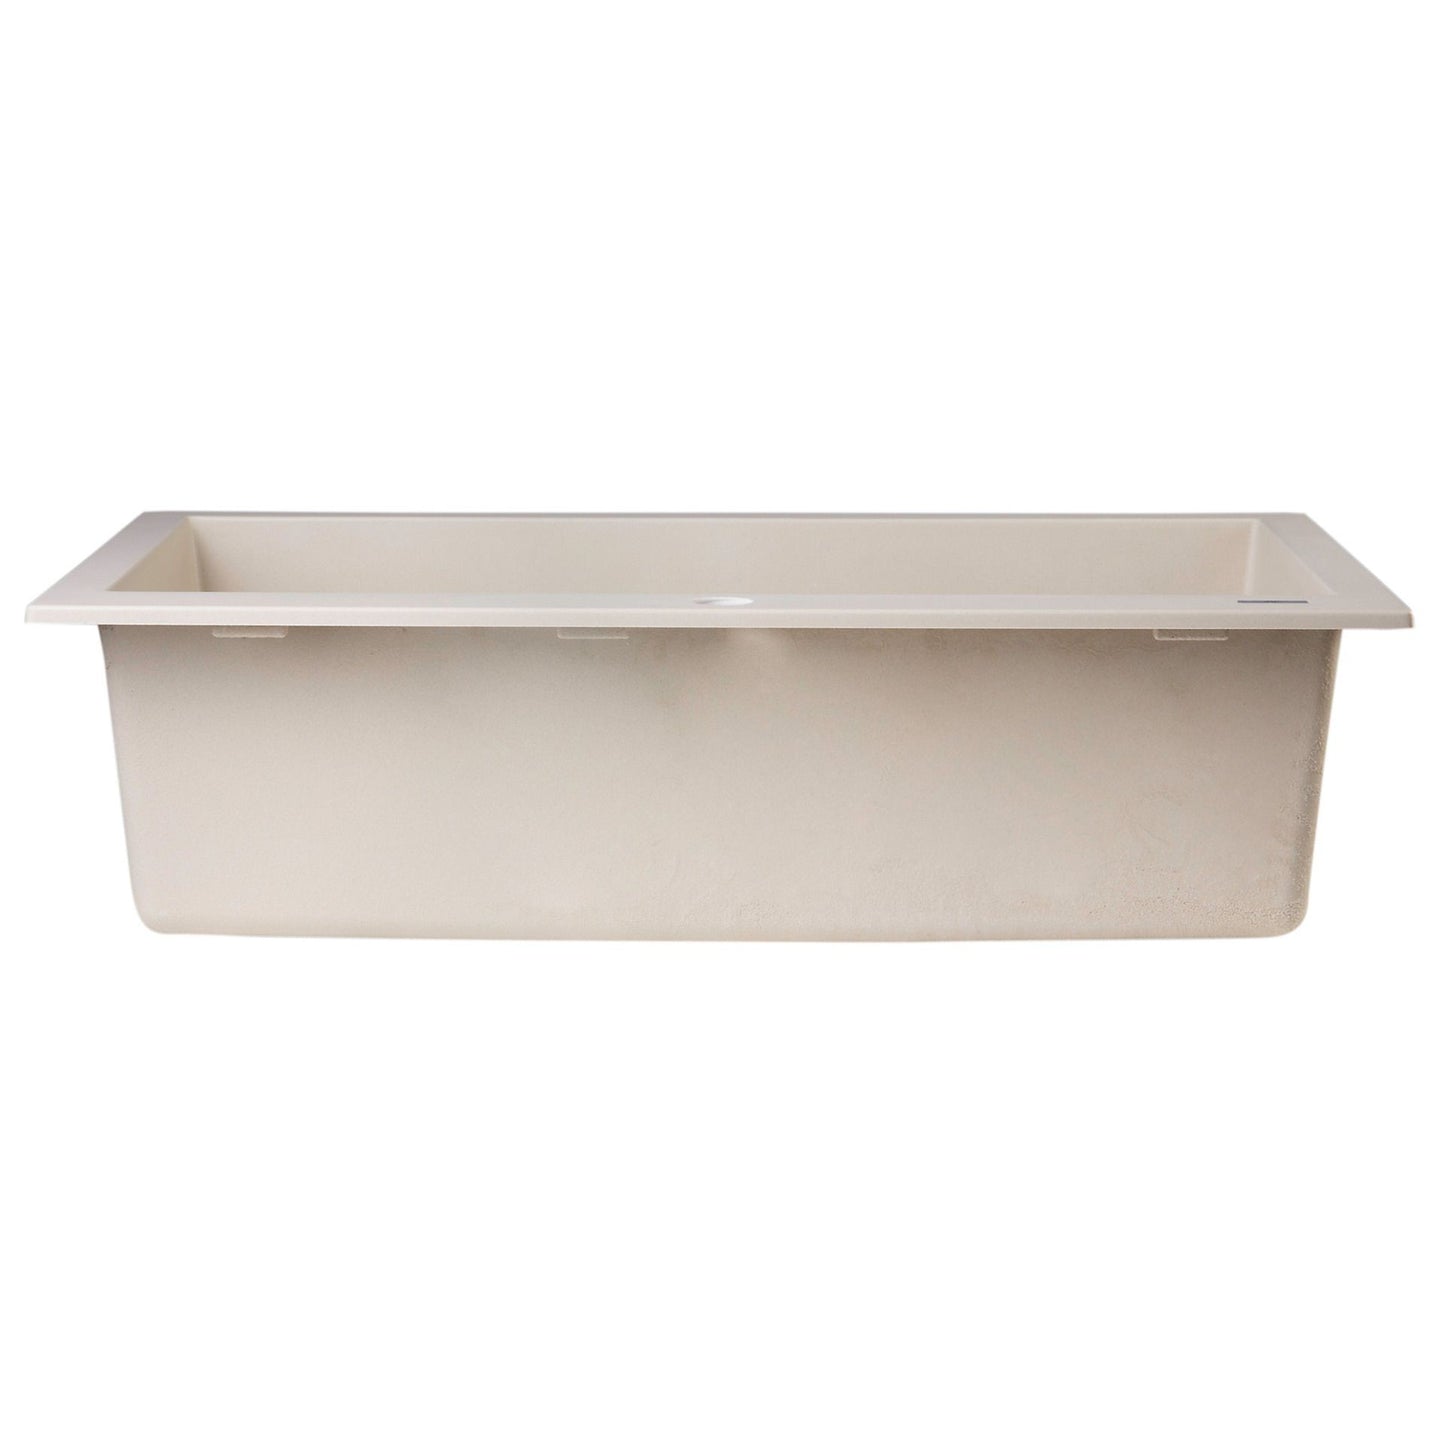 ALFI Brand AB3020DI-B Biscuit 30" Drop-In Single Bowl Granite Composite Kitchen Sink